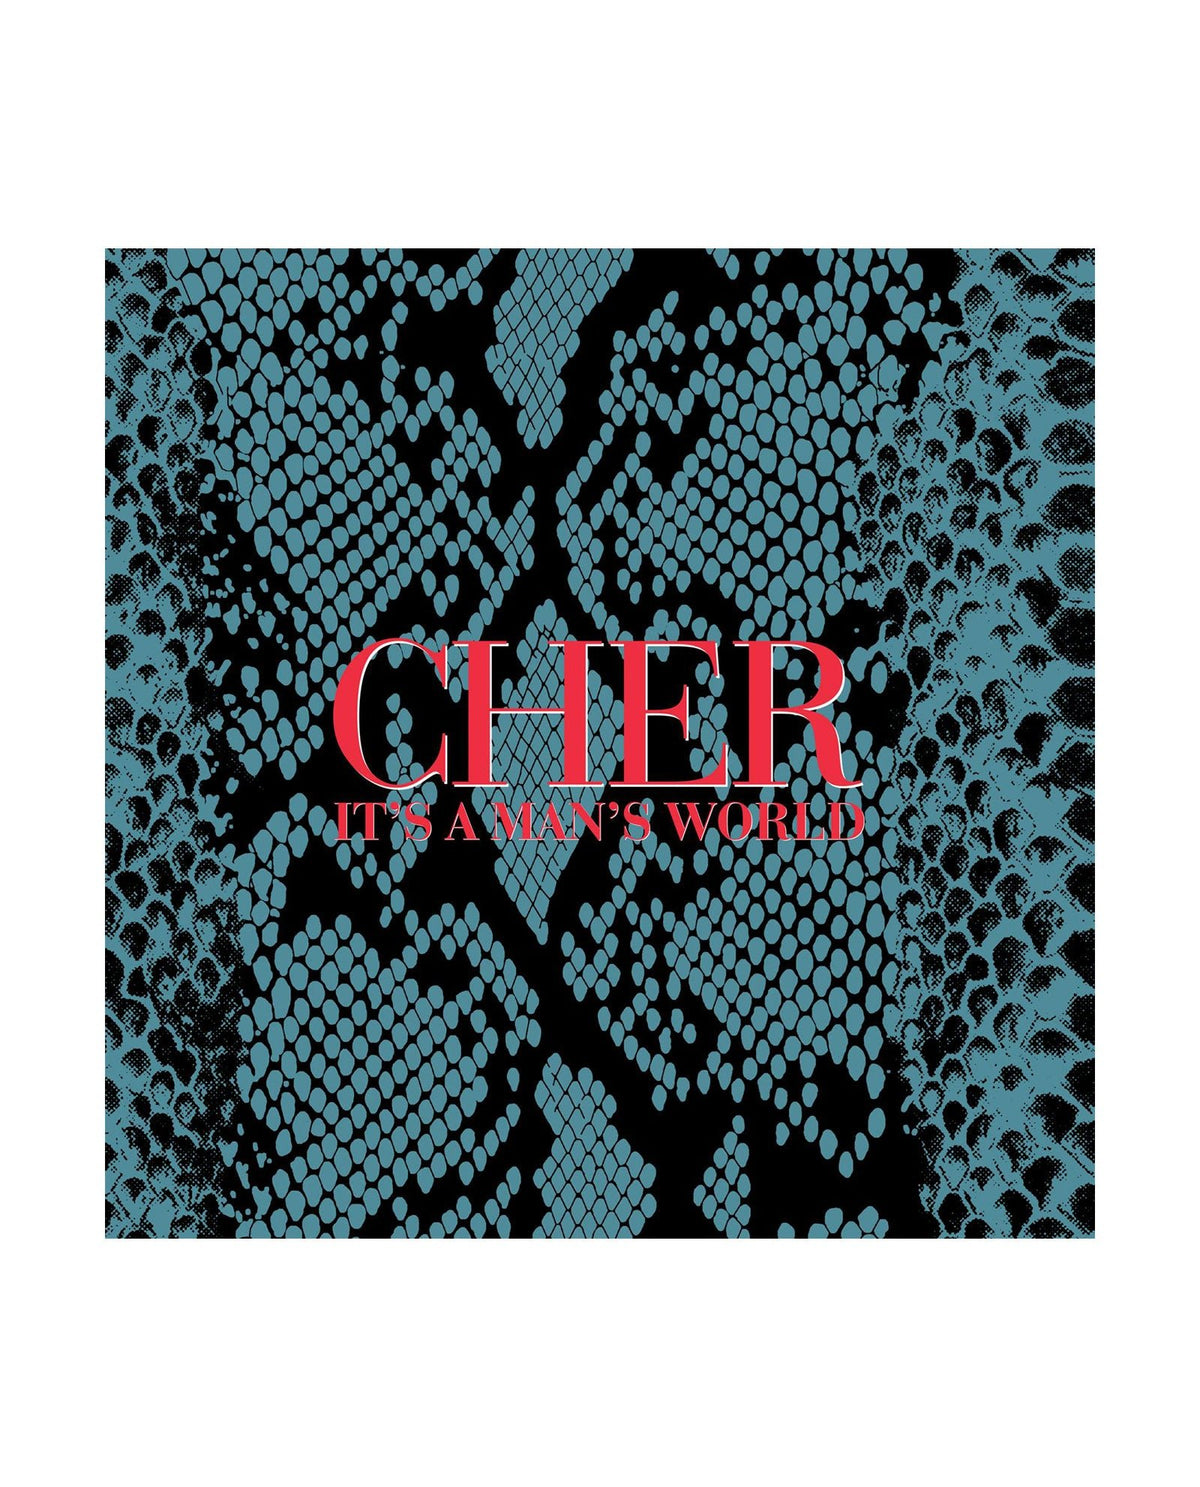 Cher - 2CD "It's a man's world (Deluxe Edition)" - D2fy · Rocktud - D2fy